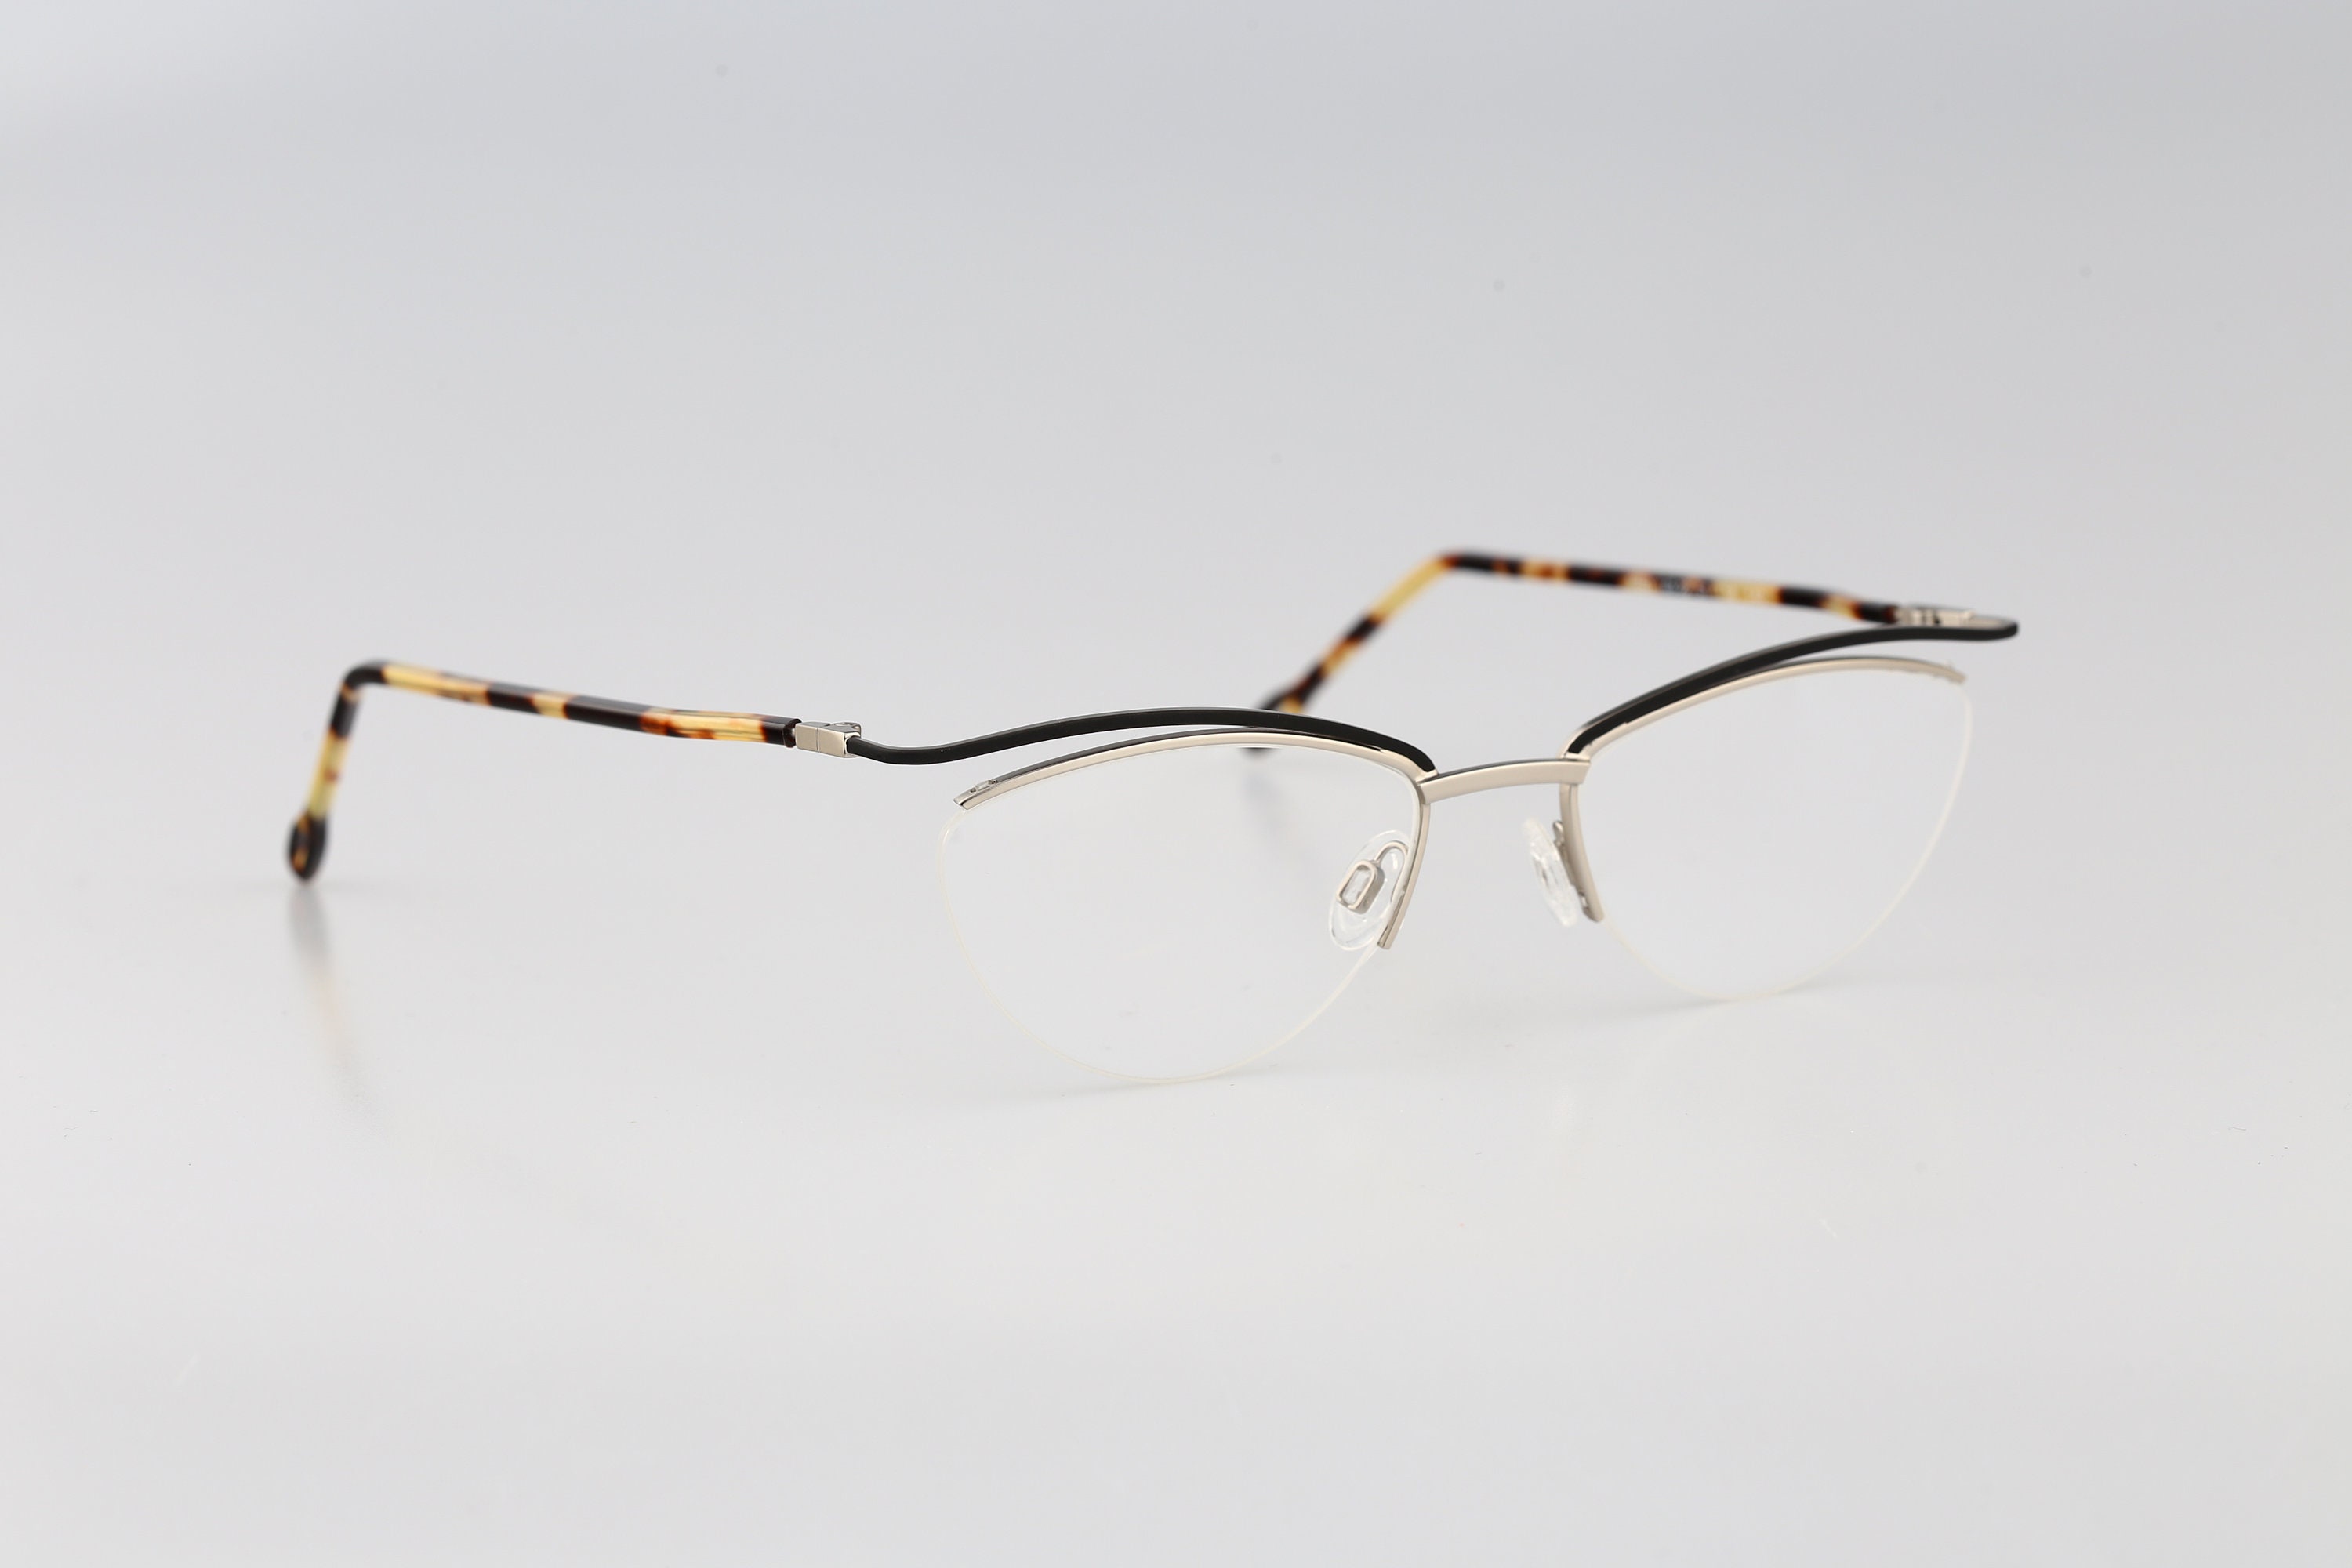 Accessoires Zonnebrillen & Eyewear Brillen Robert Rudger 1550 148 22 Vintage jaren '90 uniek zwart & grijs halve velg kleine kattenbril frames vrouwen NOS 